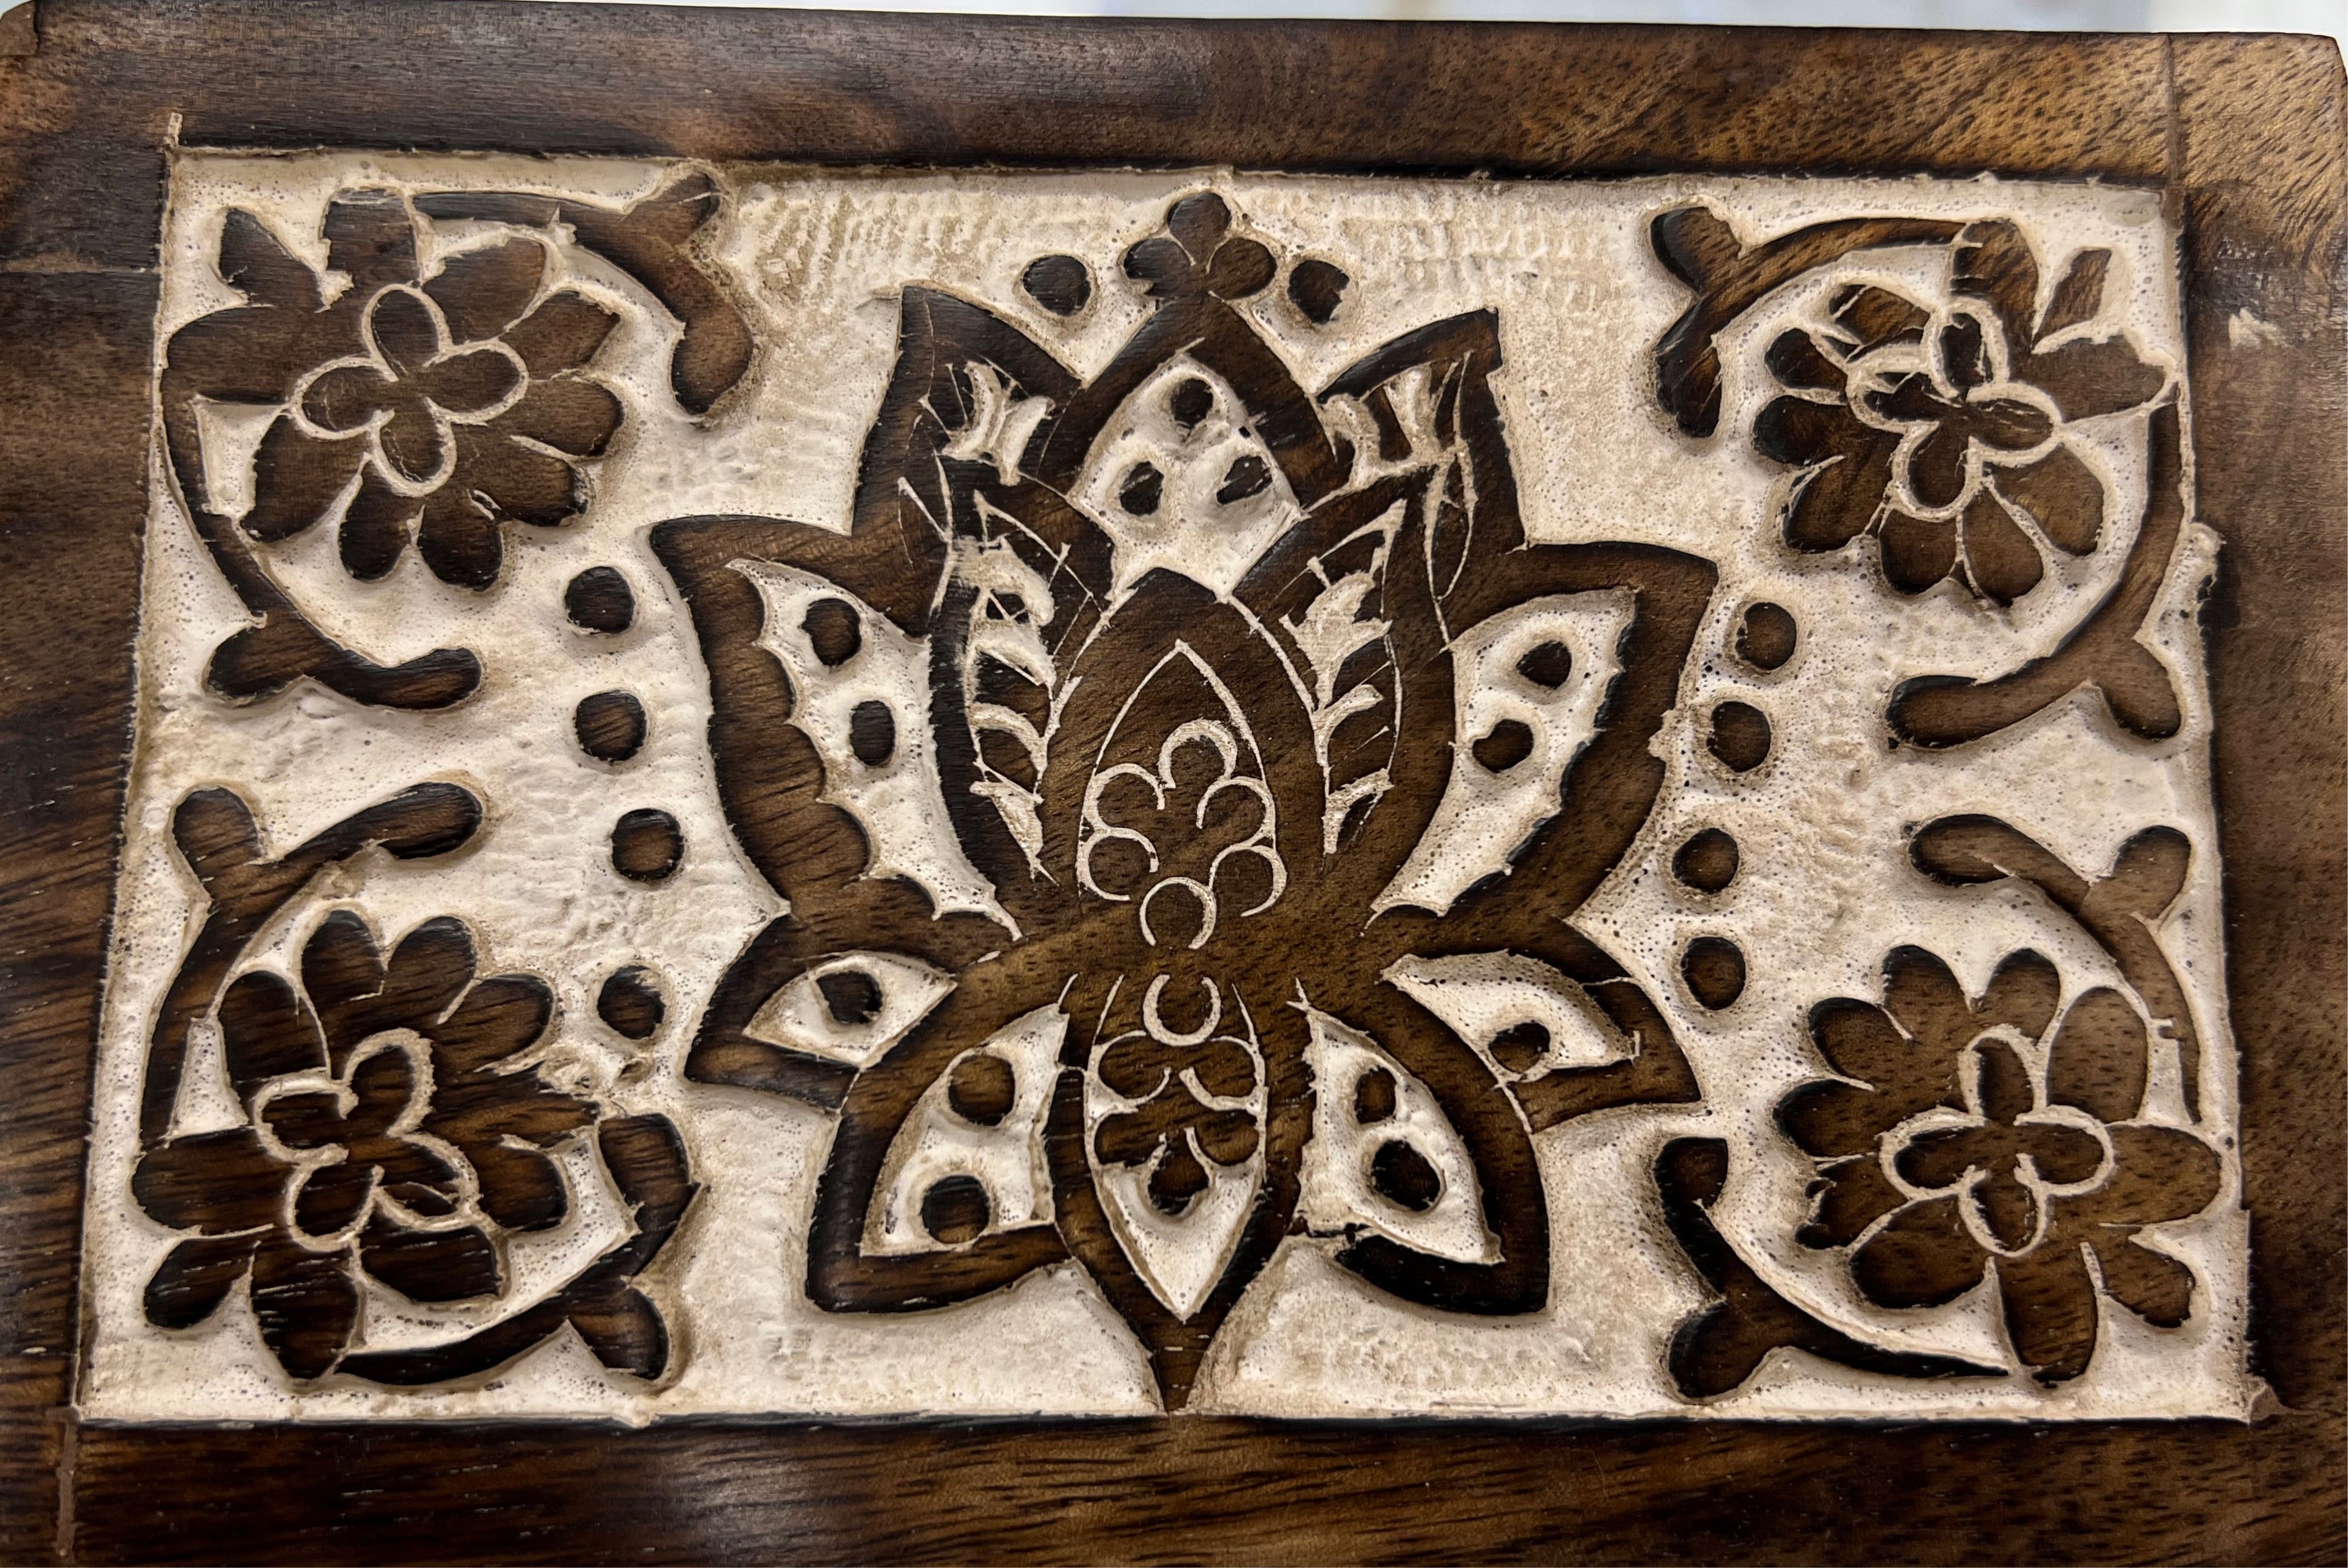 Lotus Carved Wood Box